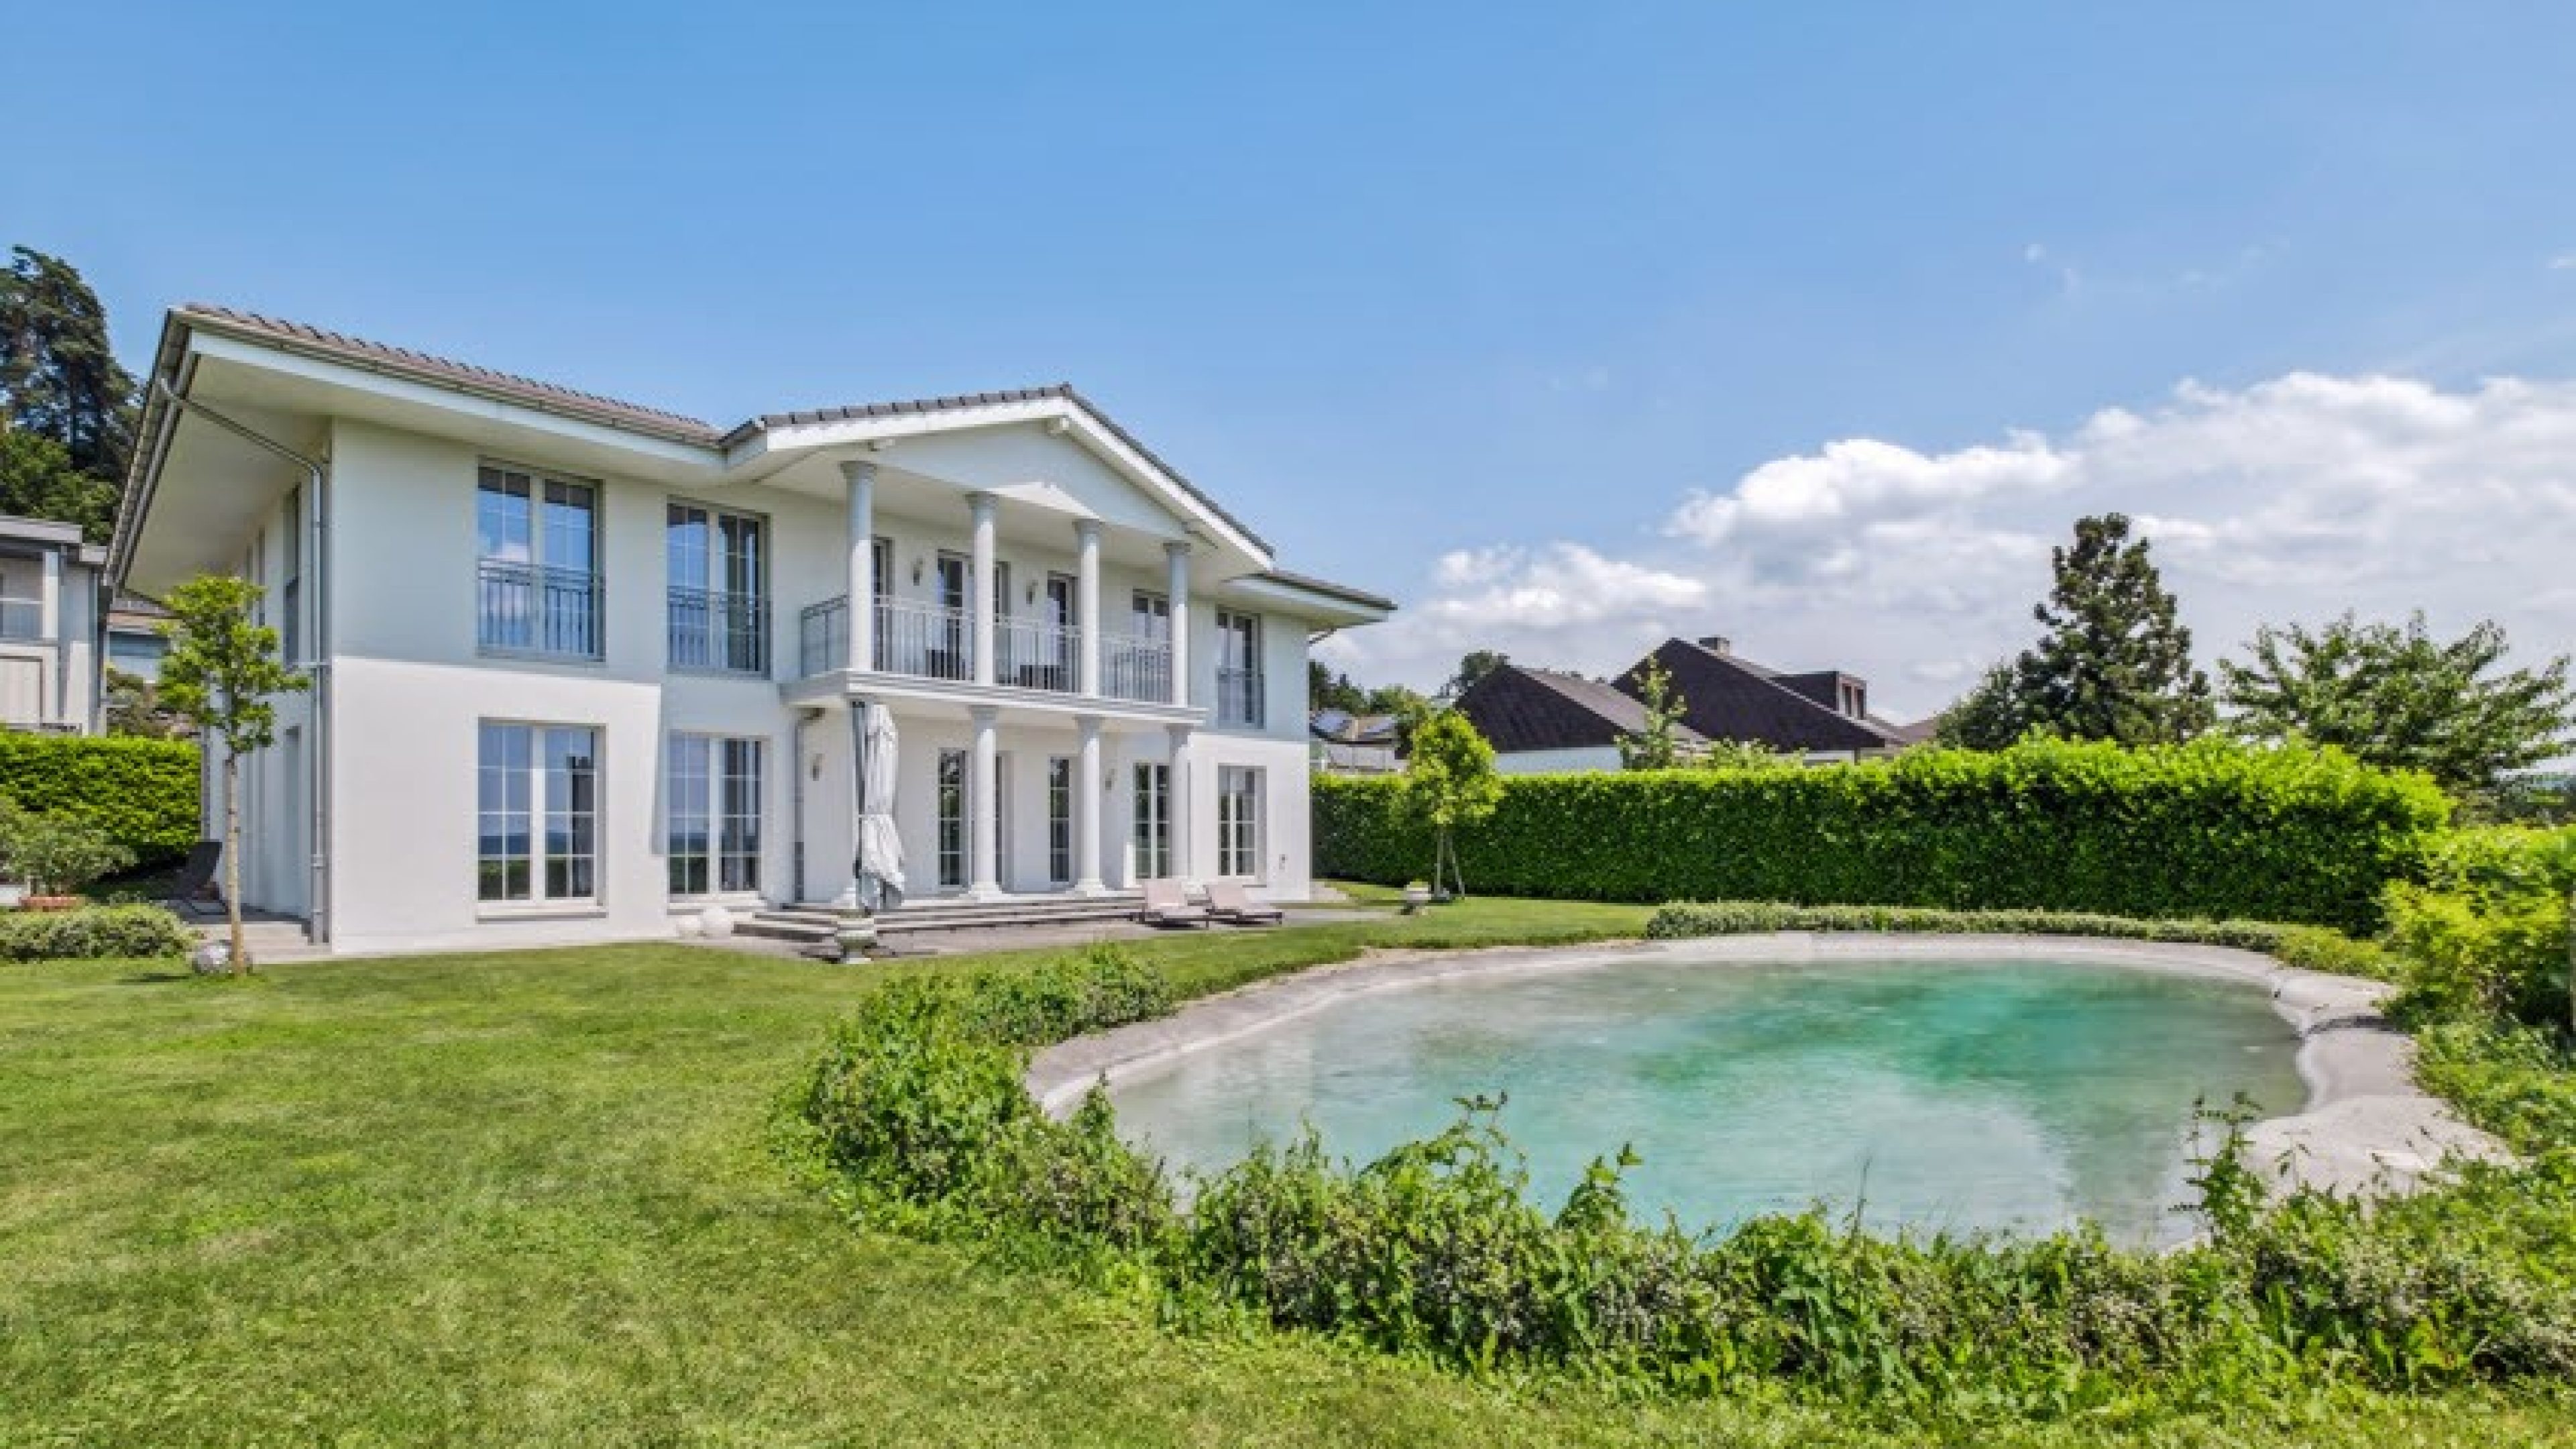 Villa bianca con giardino e piscina naturale